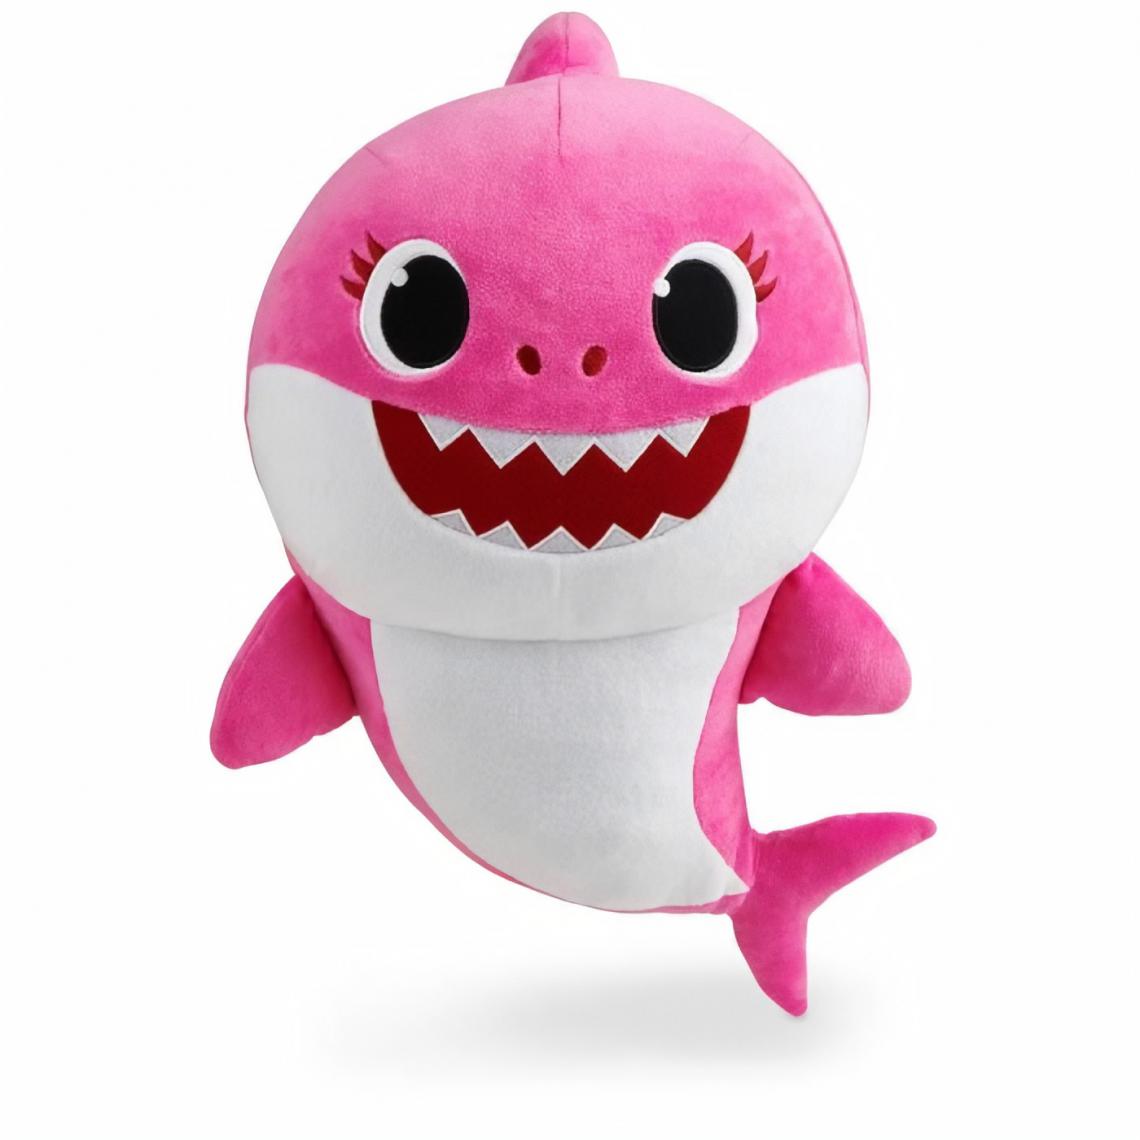 Splash Toys - BABY SHARK PELUCHE MUSICALE 30 CM ROSE - Héros et personnages